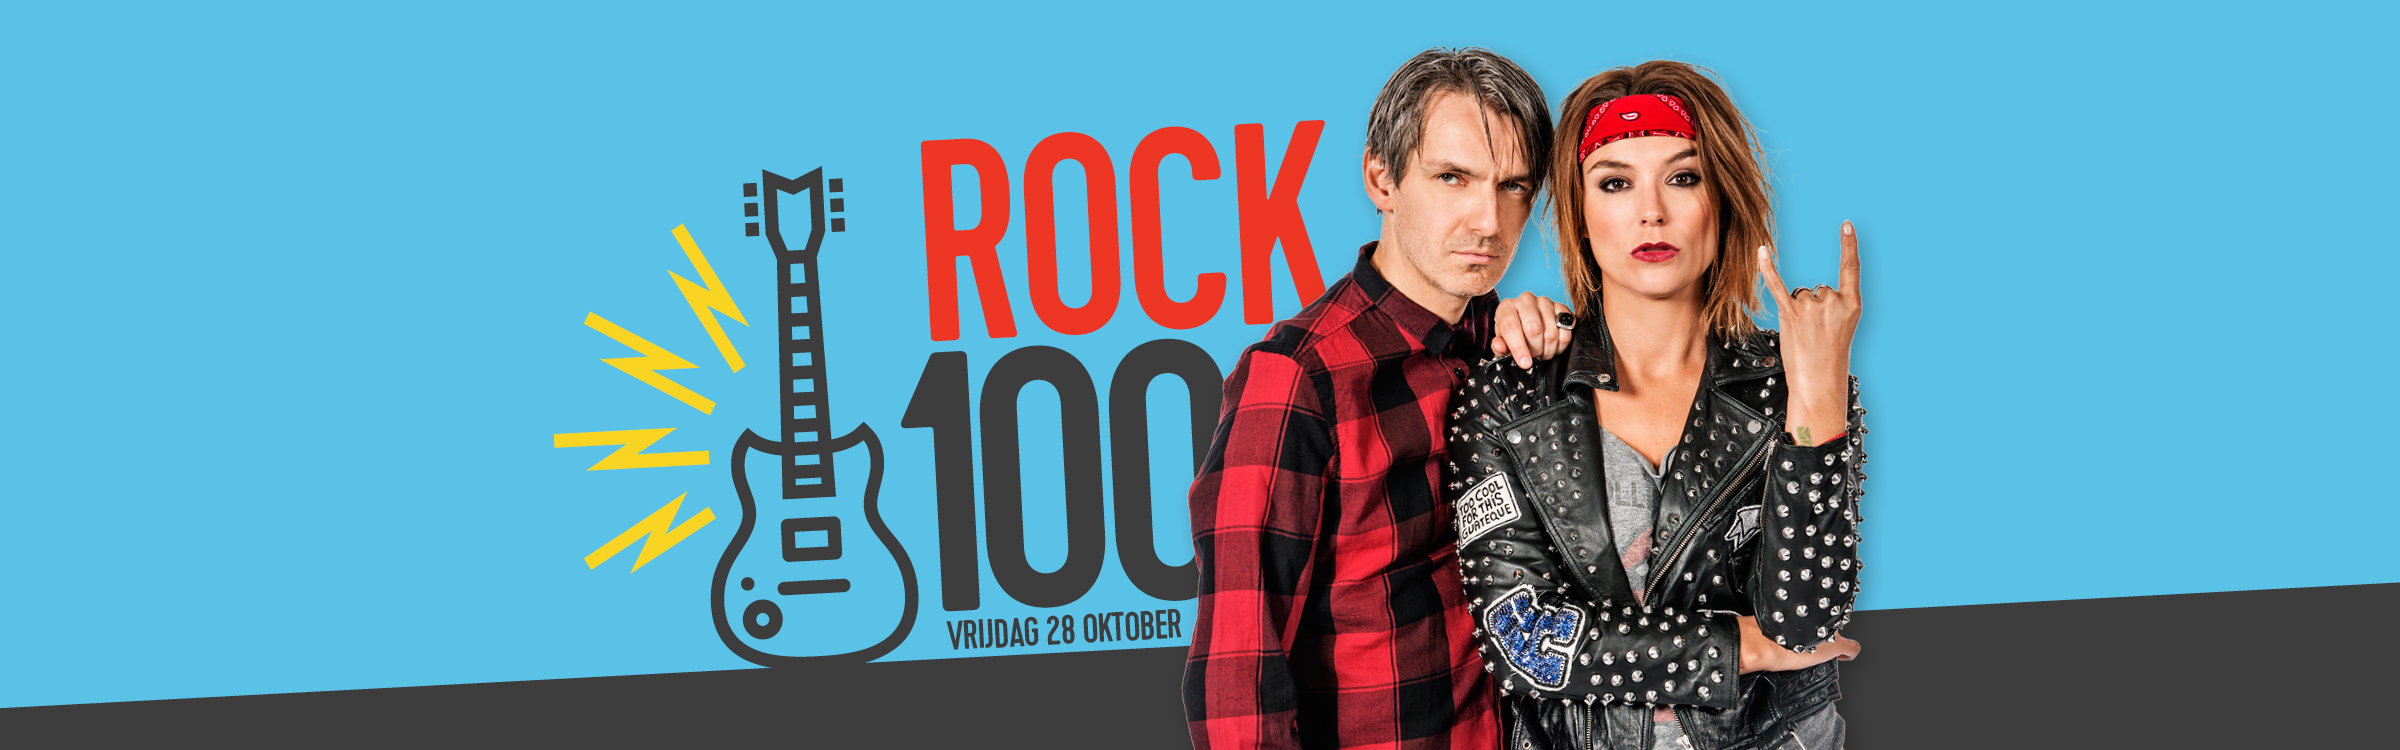 Q rock100 header 1350x750